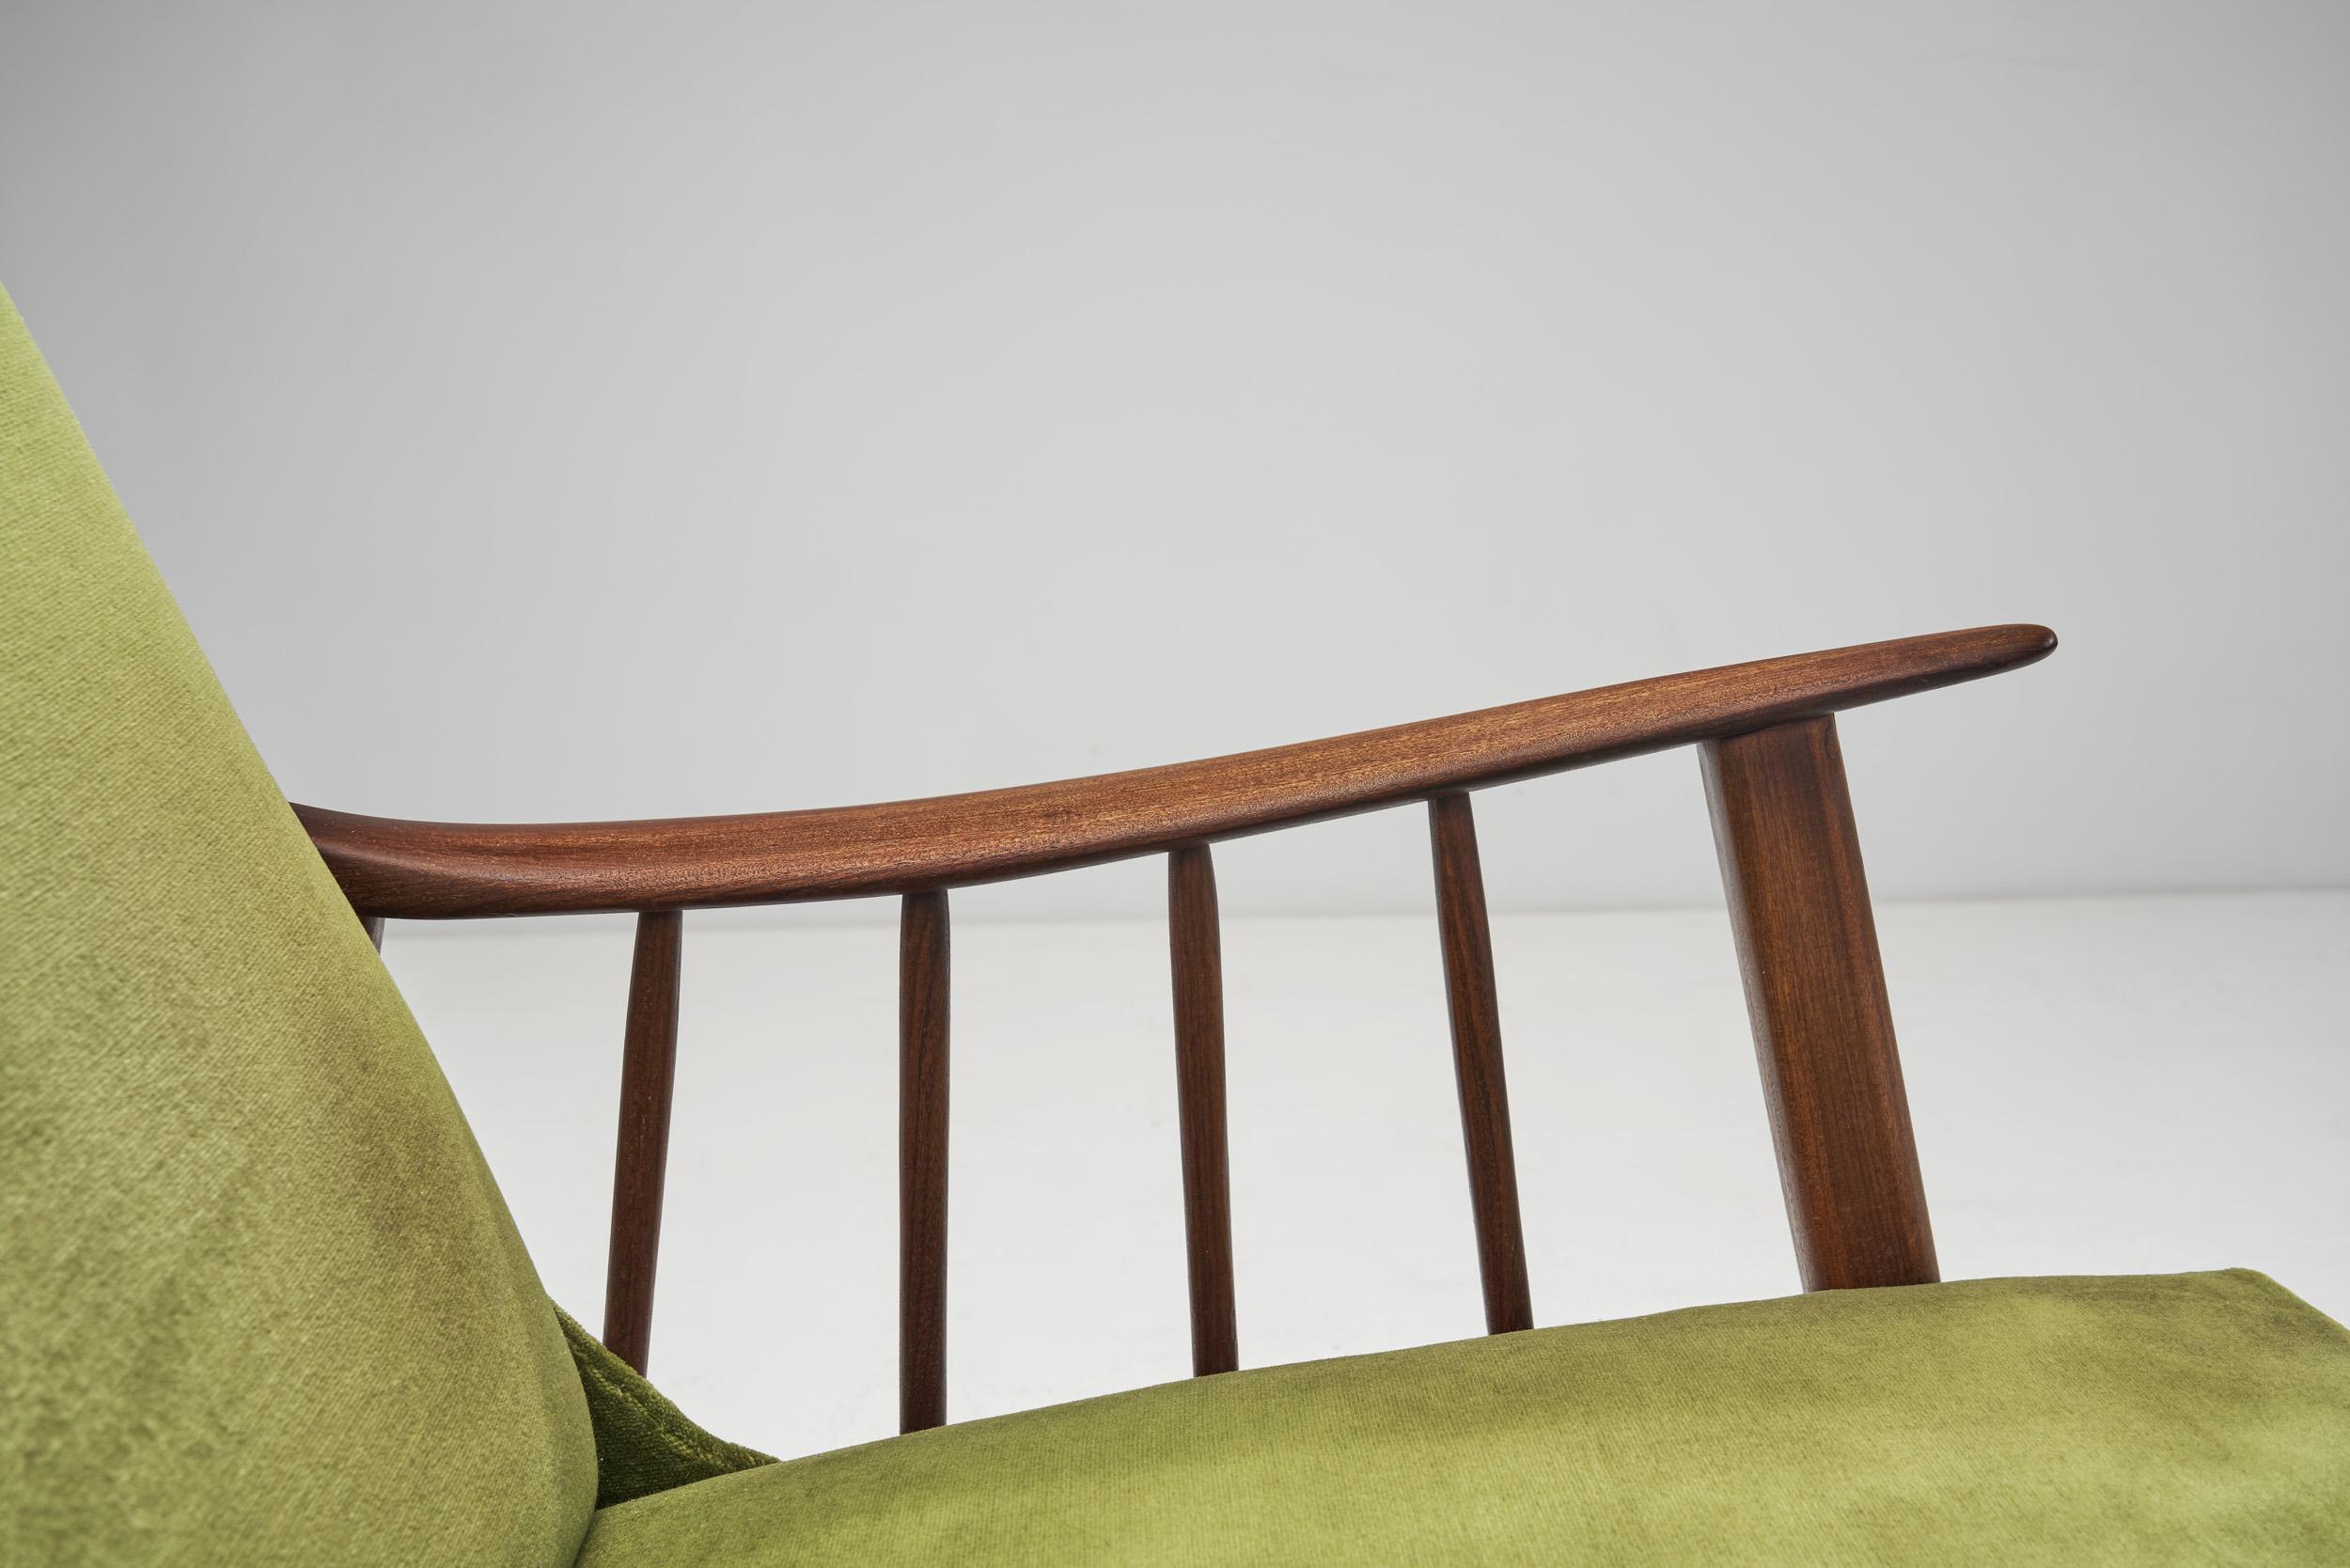 Teak Upholstered Armchairs with Slat Armrests, Denmark 1960s For Sale 4